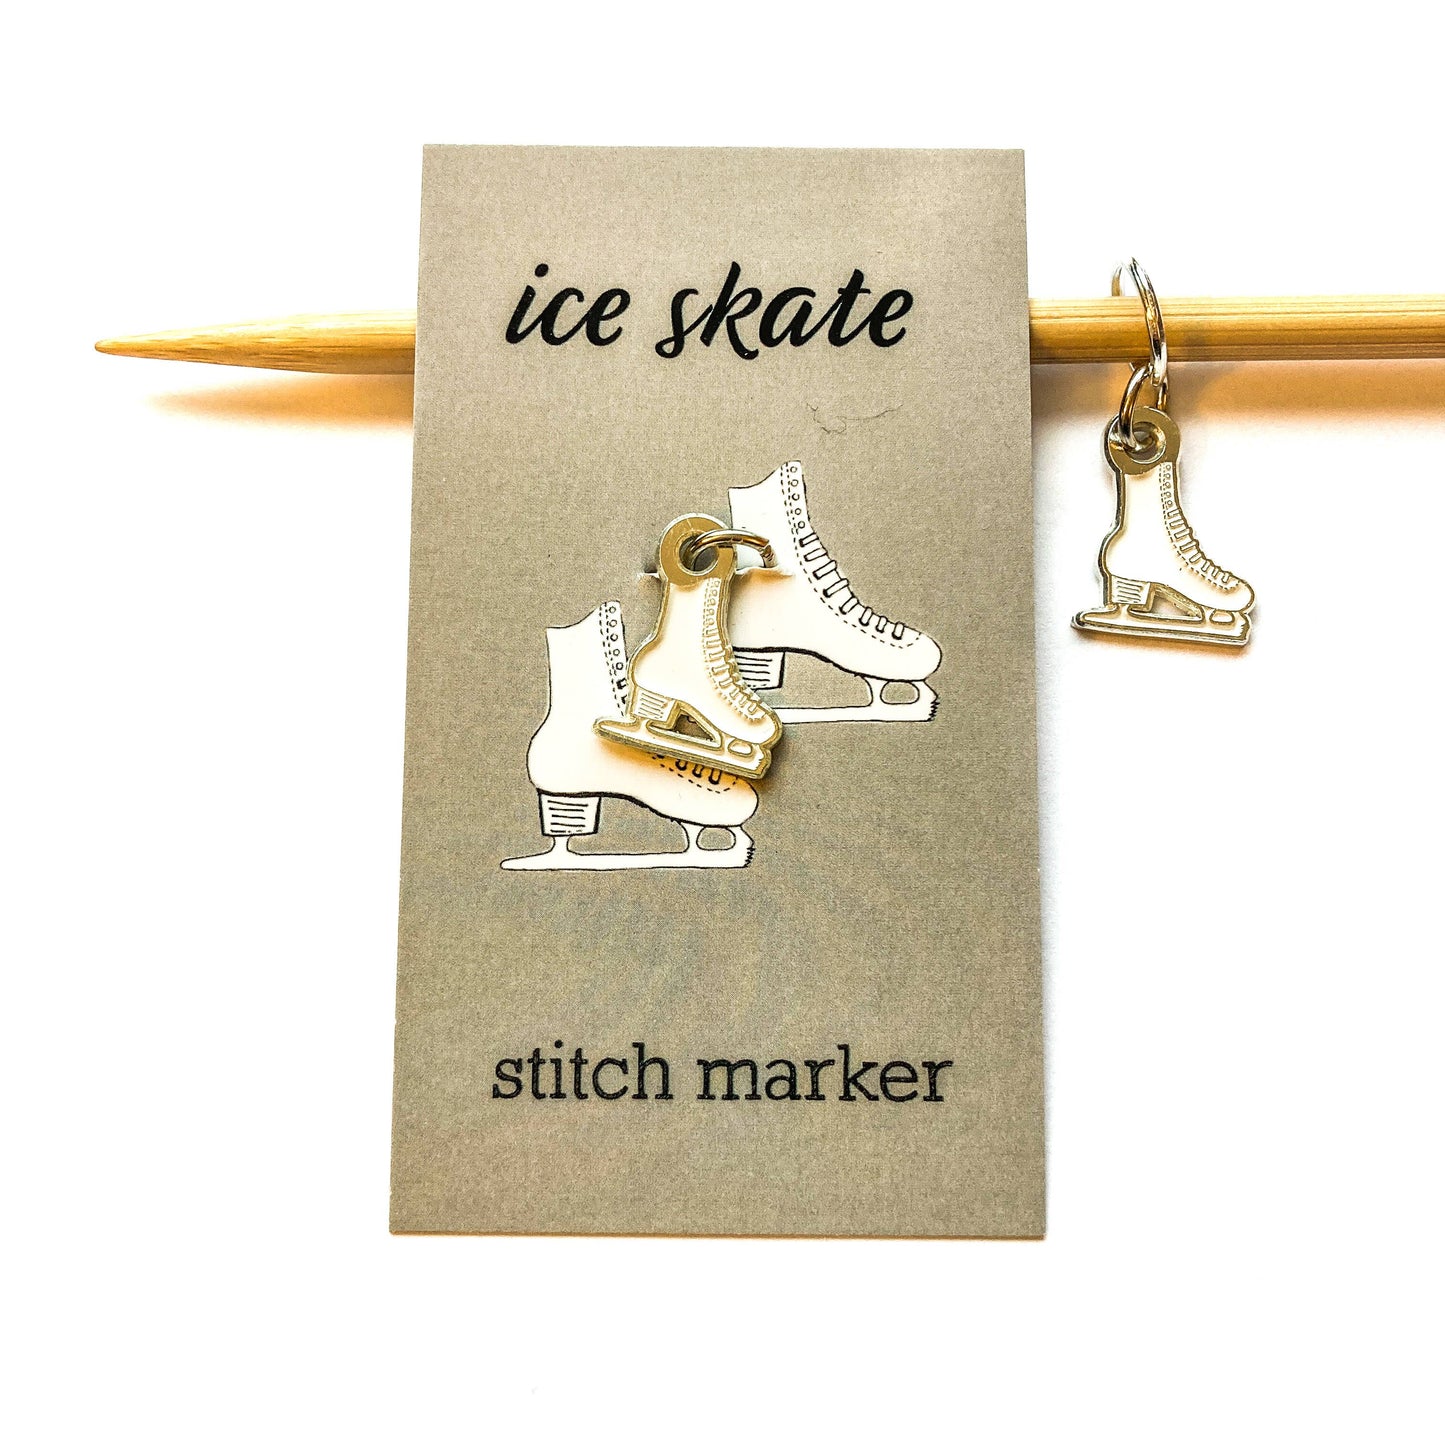 Ice skate stitch marker or progress keeper: Round